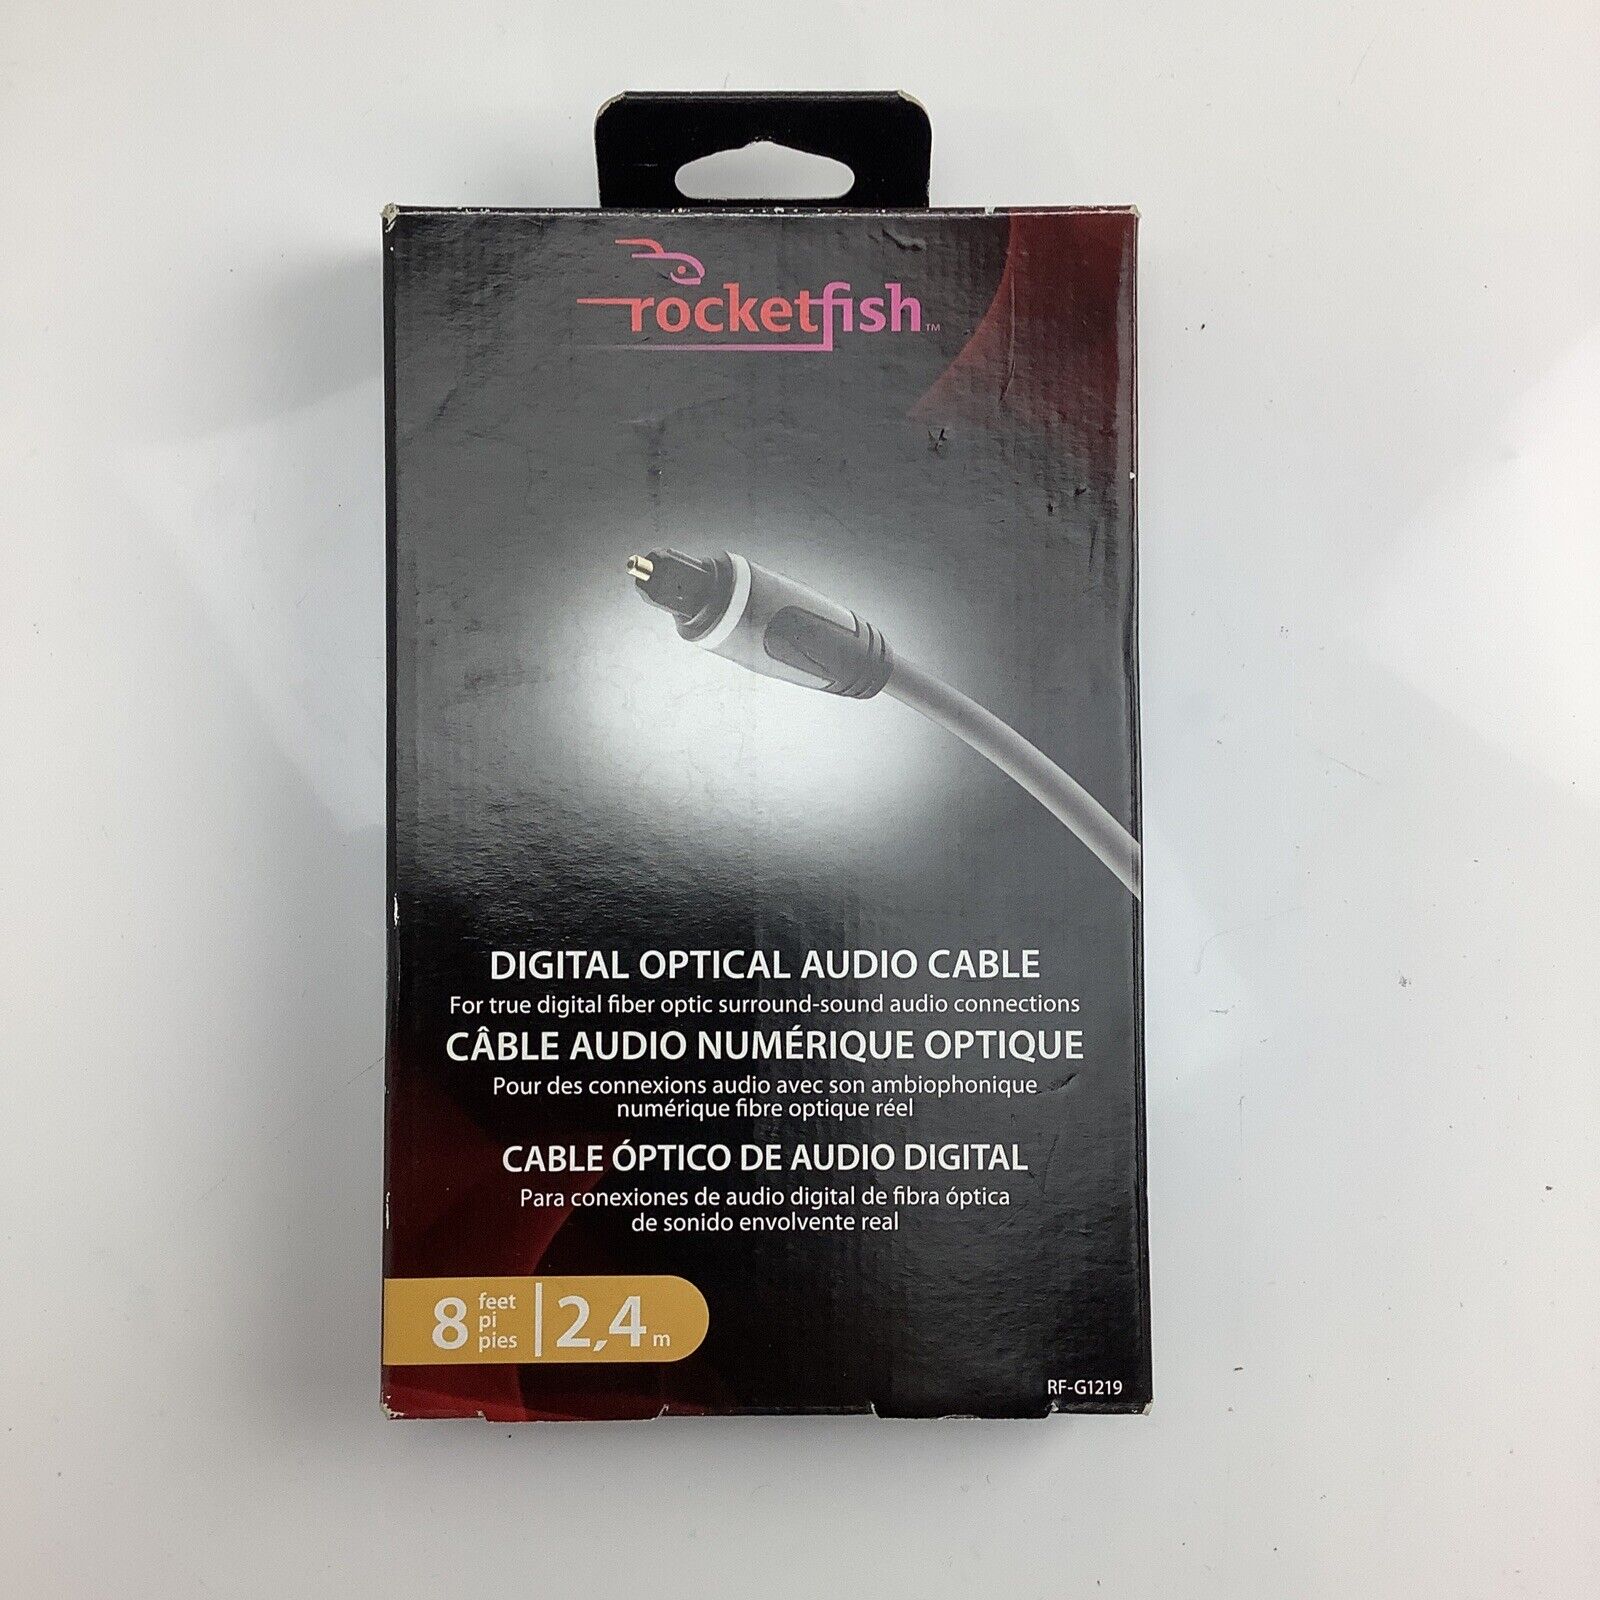 dieta Hermano Reciclar RocketFish Digital Optical audio Cable - 8ft 2.4m | eBay